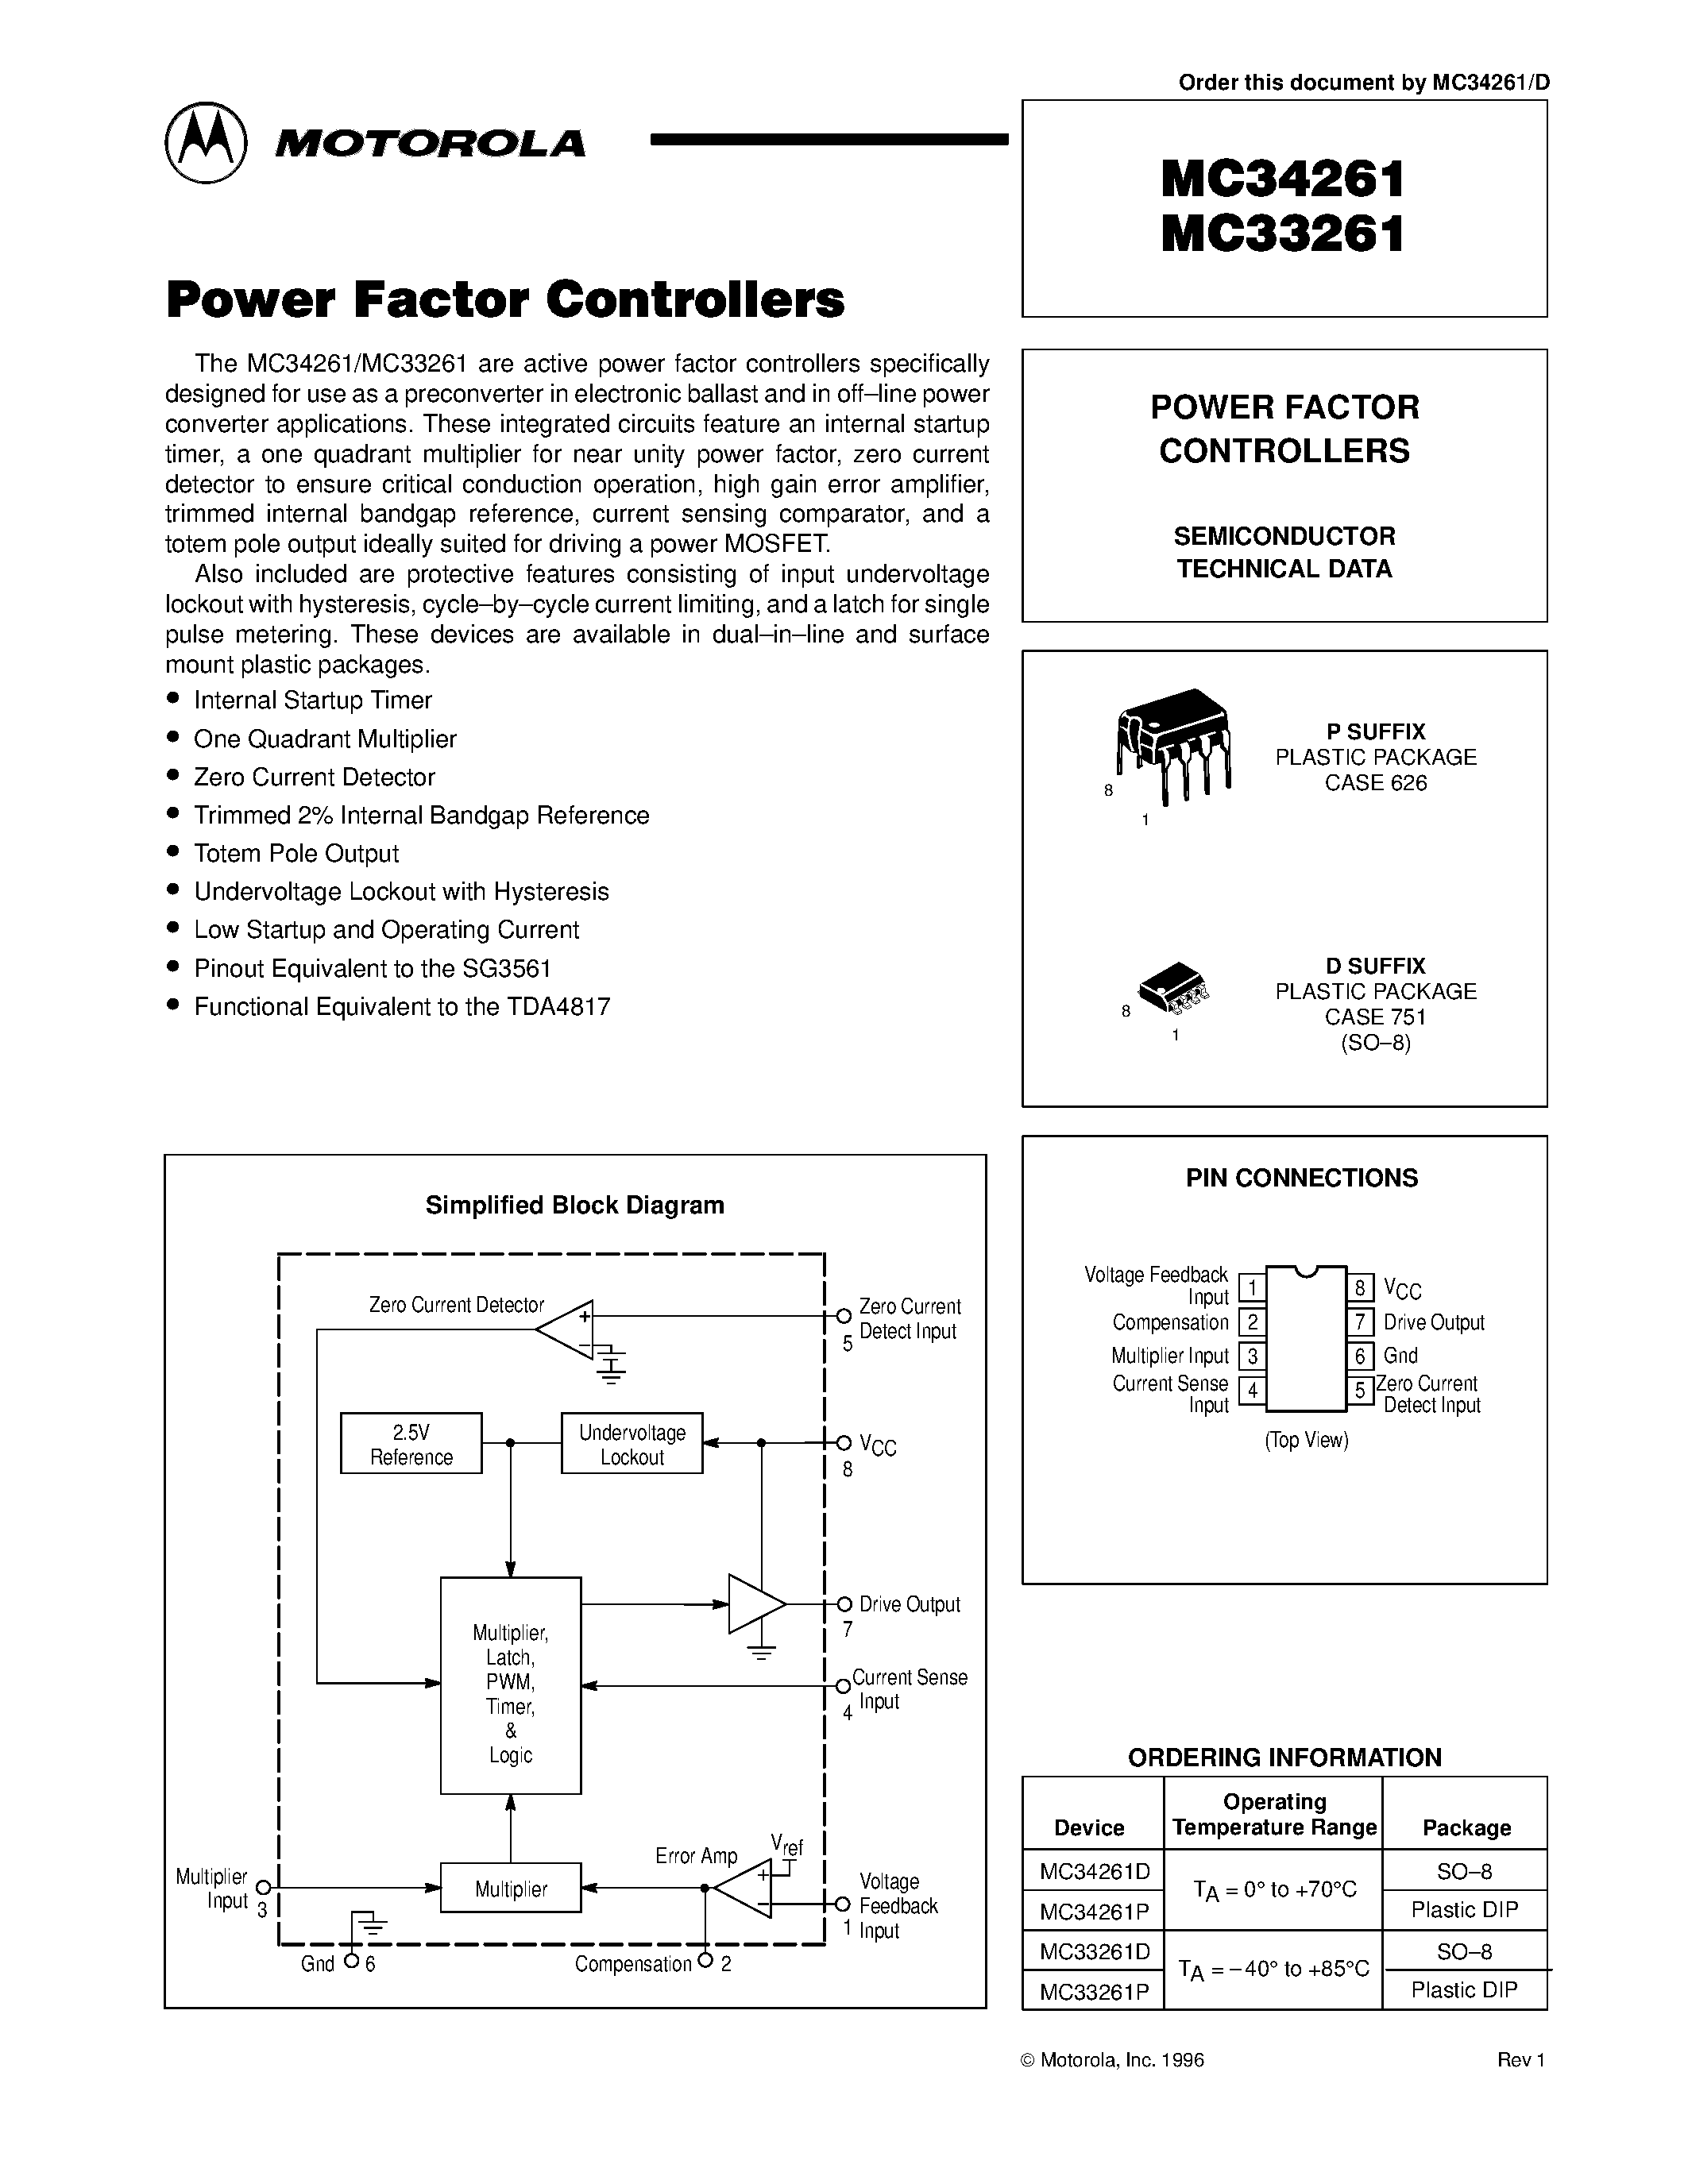 Даташит MC33261 - (MC33261 / MC34261) POWER FACTOR CONTROLLERS страница 1